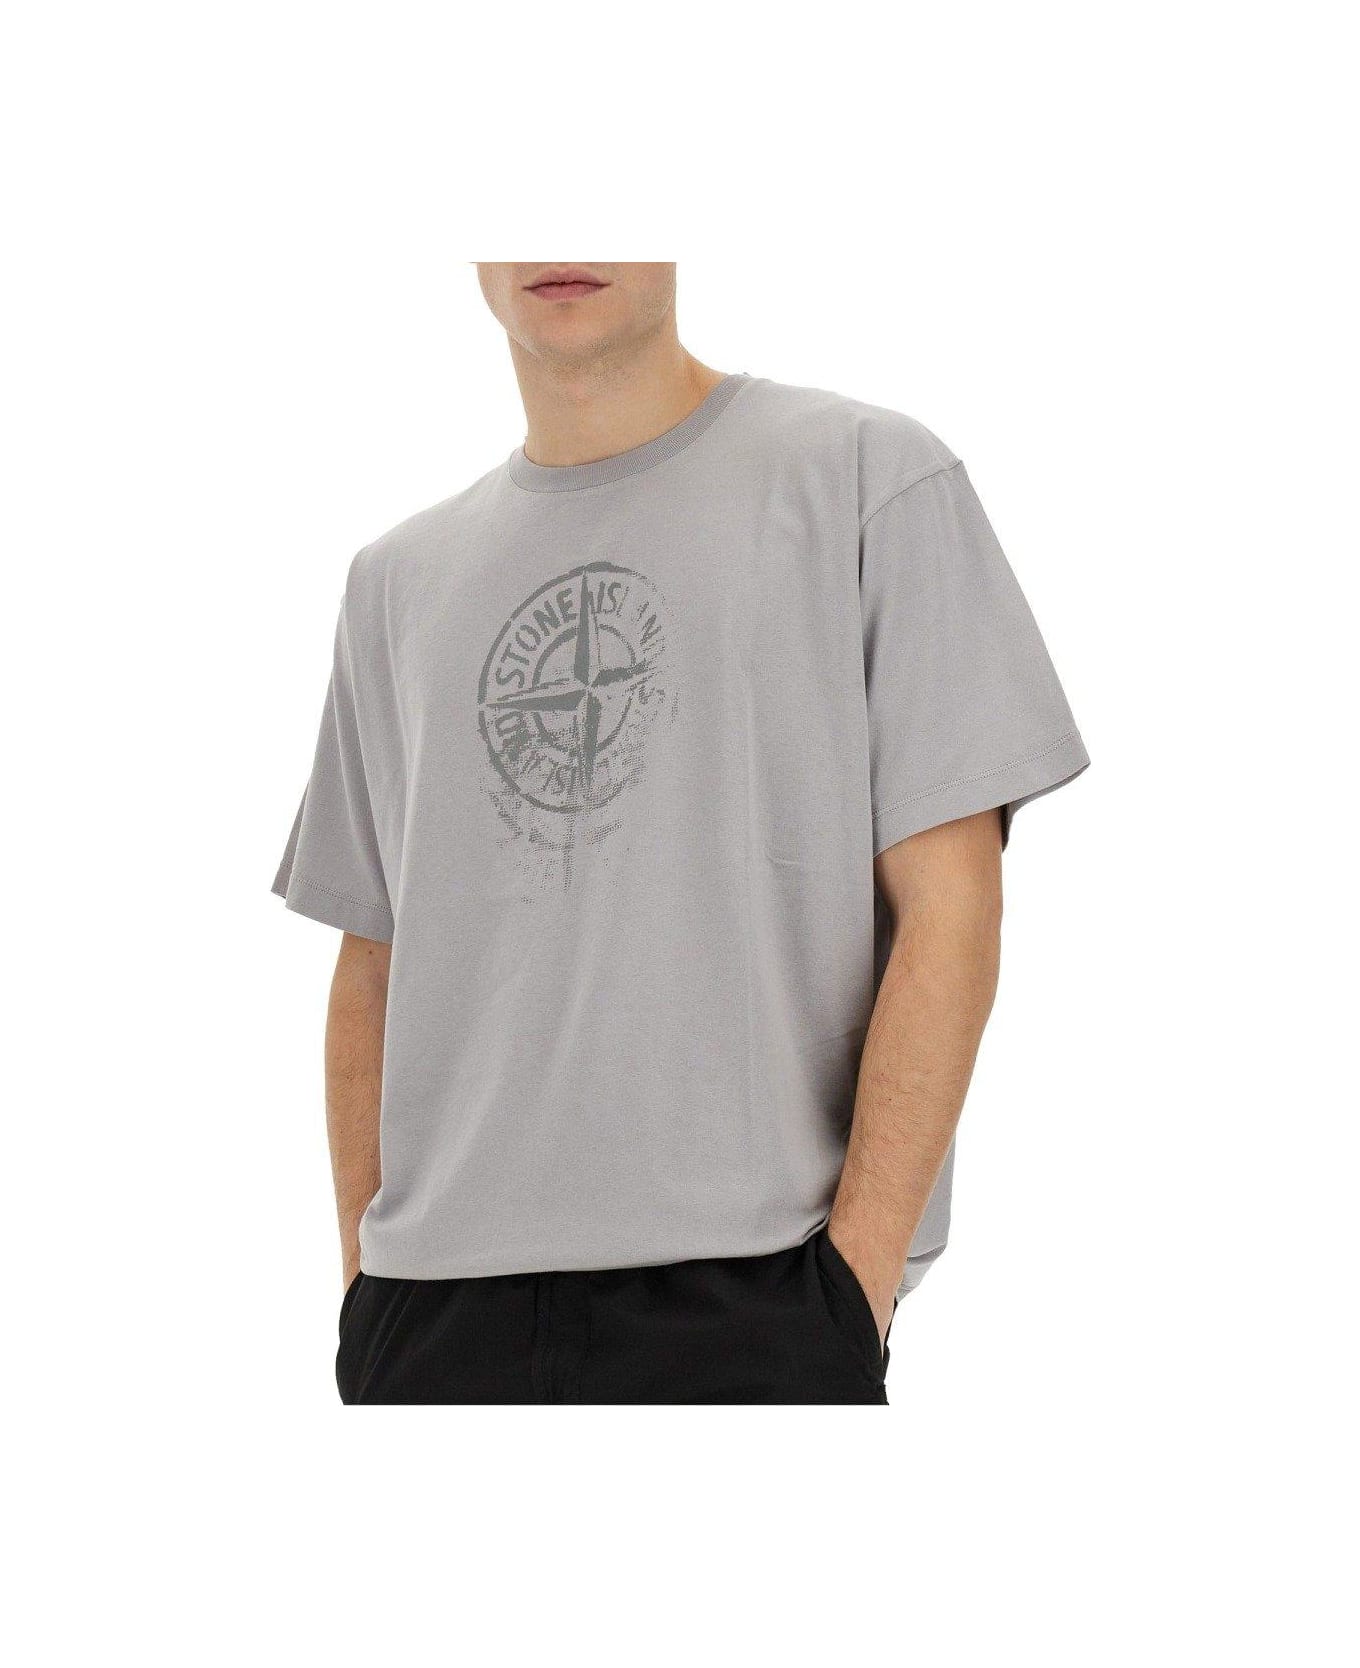 Stone Island Compass Printed Crewneck T-shirt - Grigio